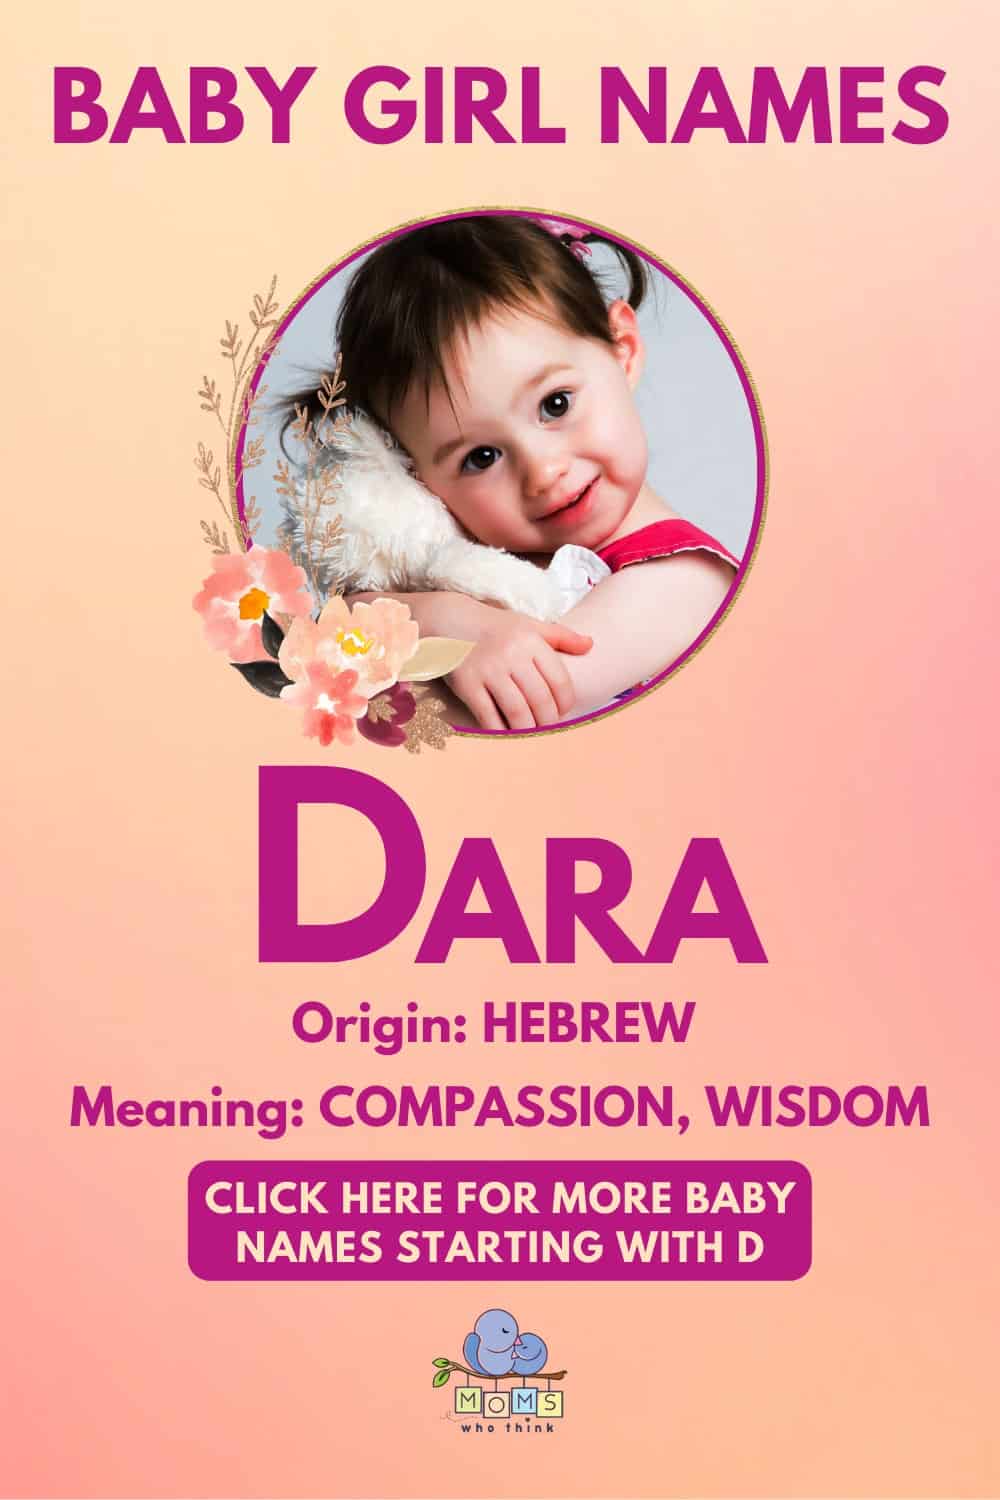 Baby girl name meanings - Dara 2